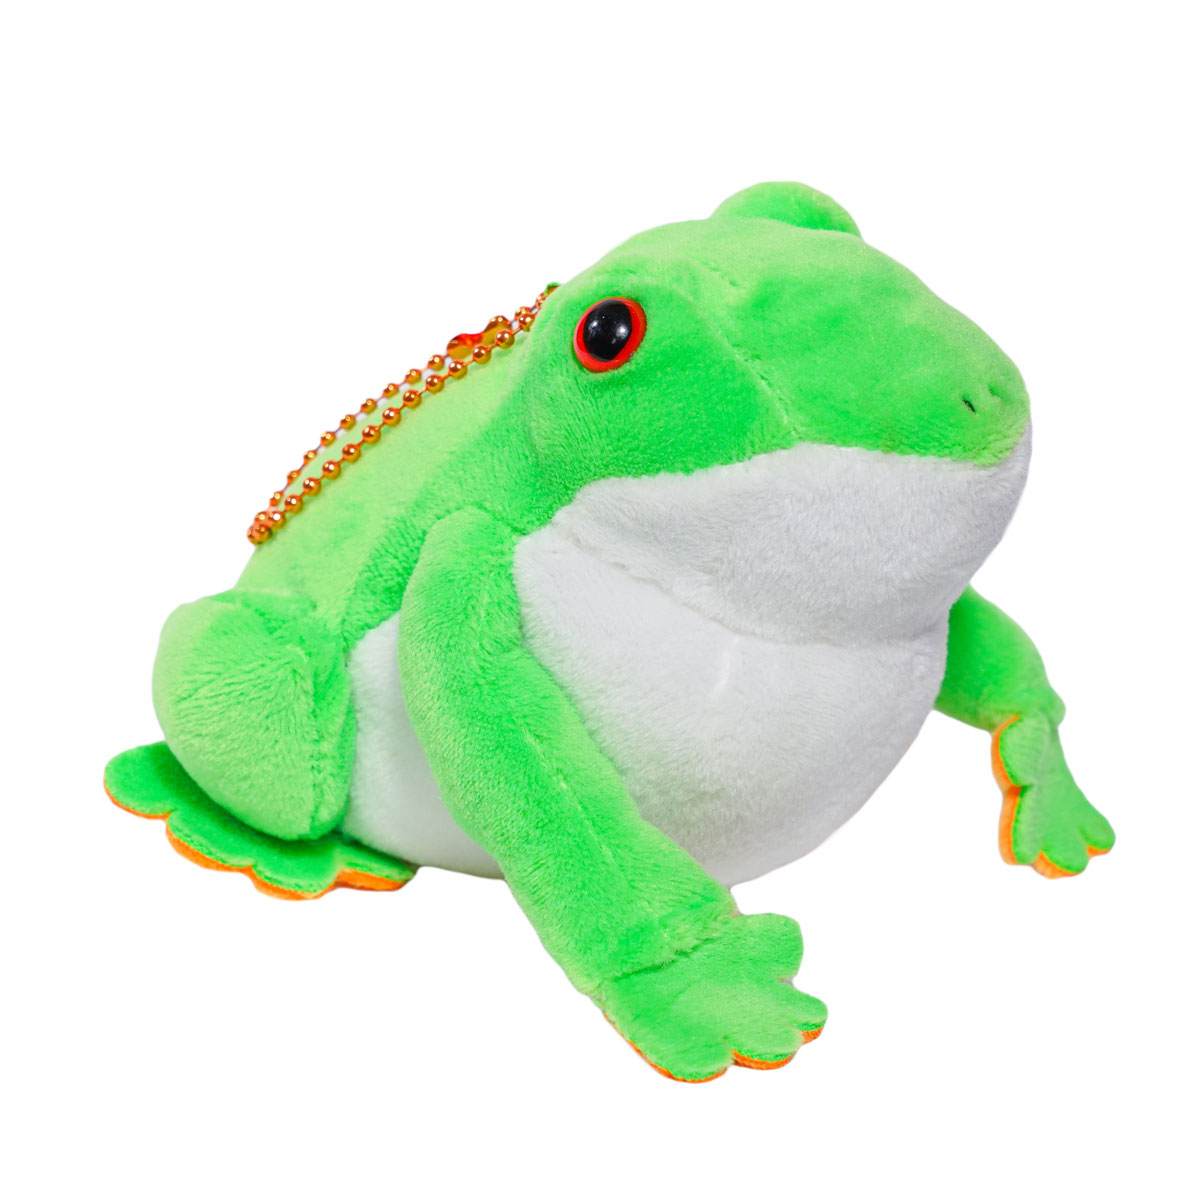 Frog Plush Toy Kawaii Stuffed Animal Green Keychain Size 3